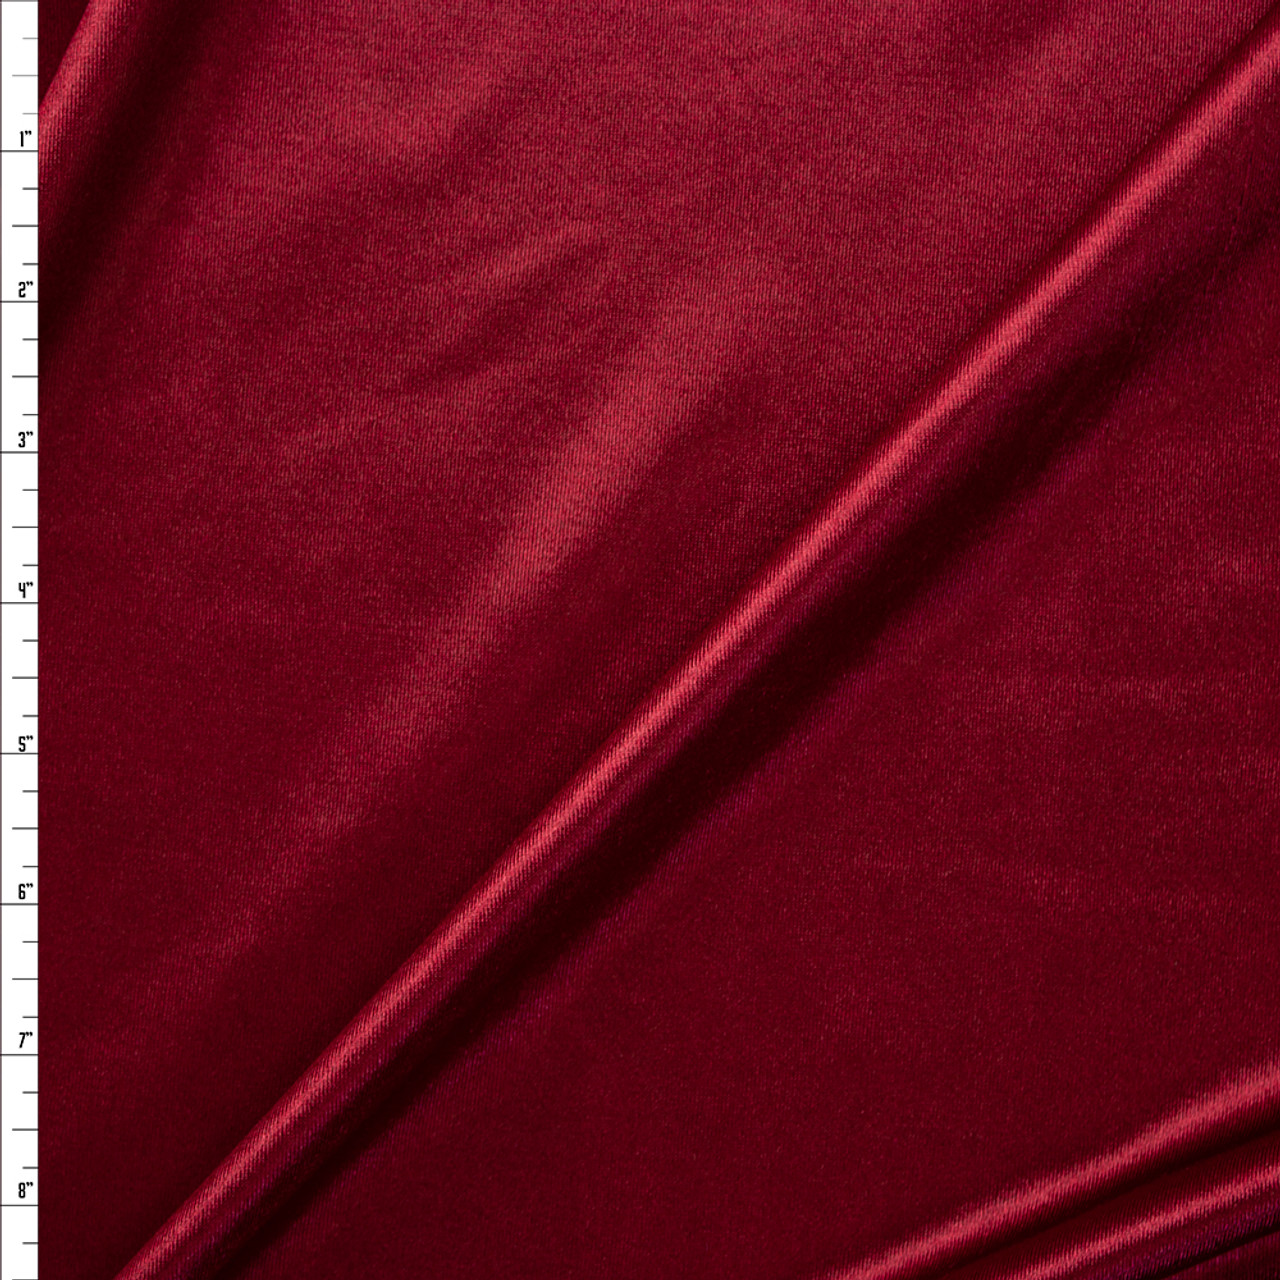 Cali Fabrics Burgundy 4-way Stretch Velvet By The Yard